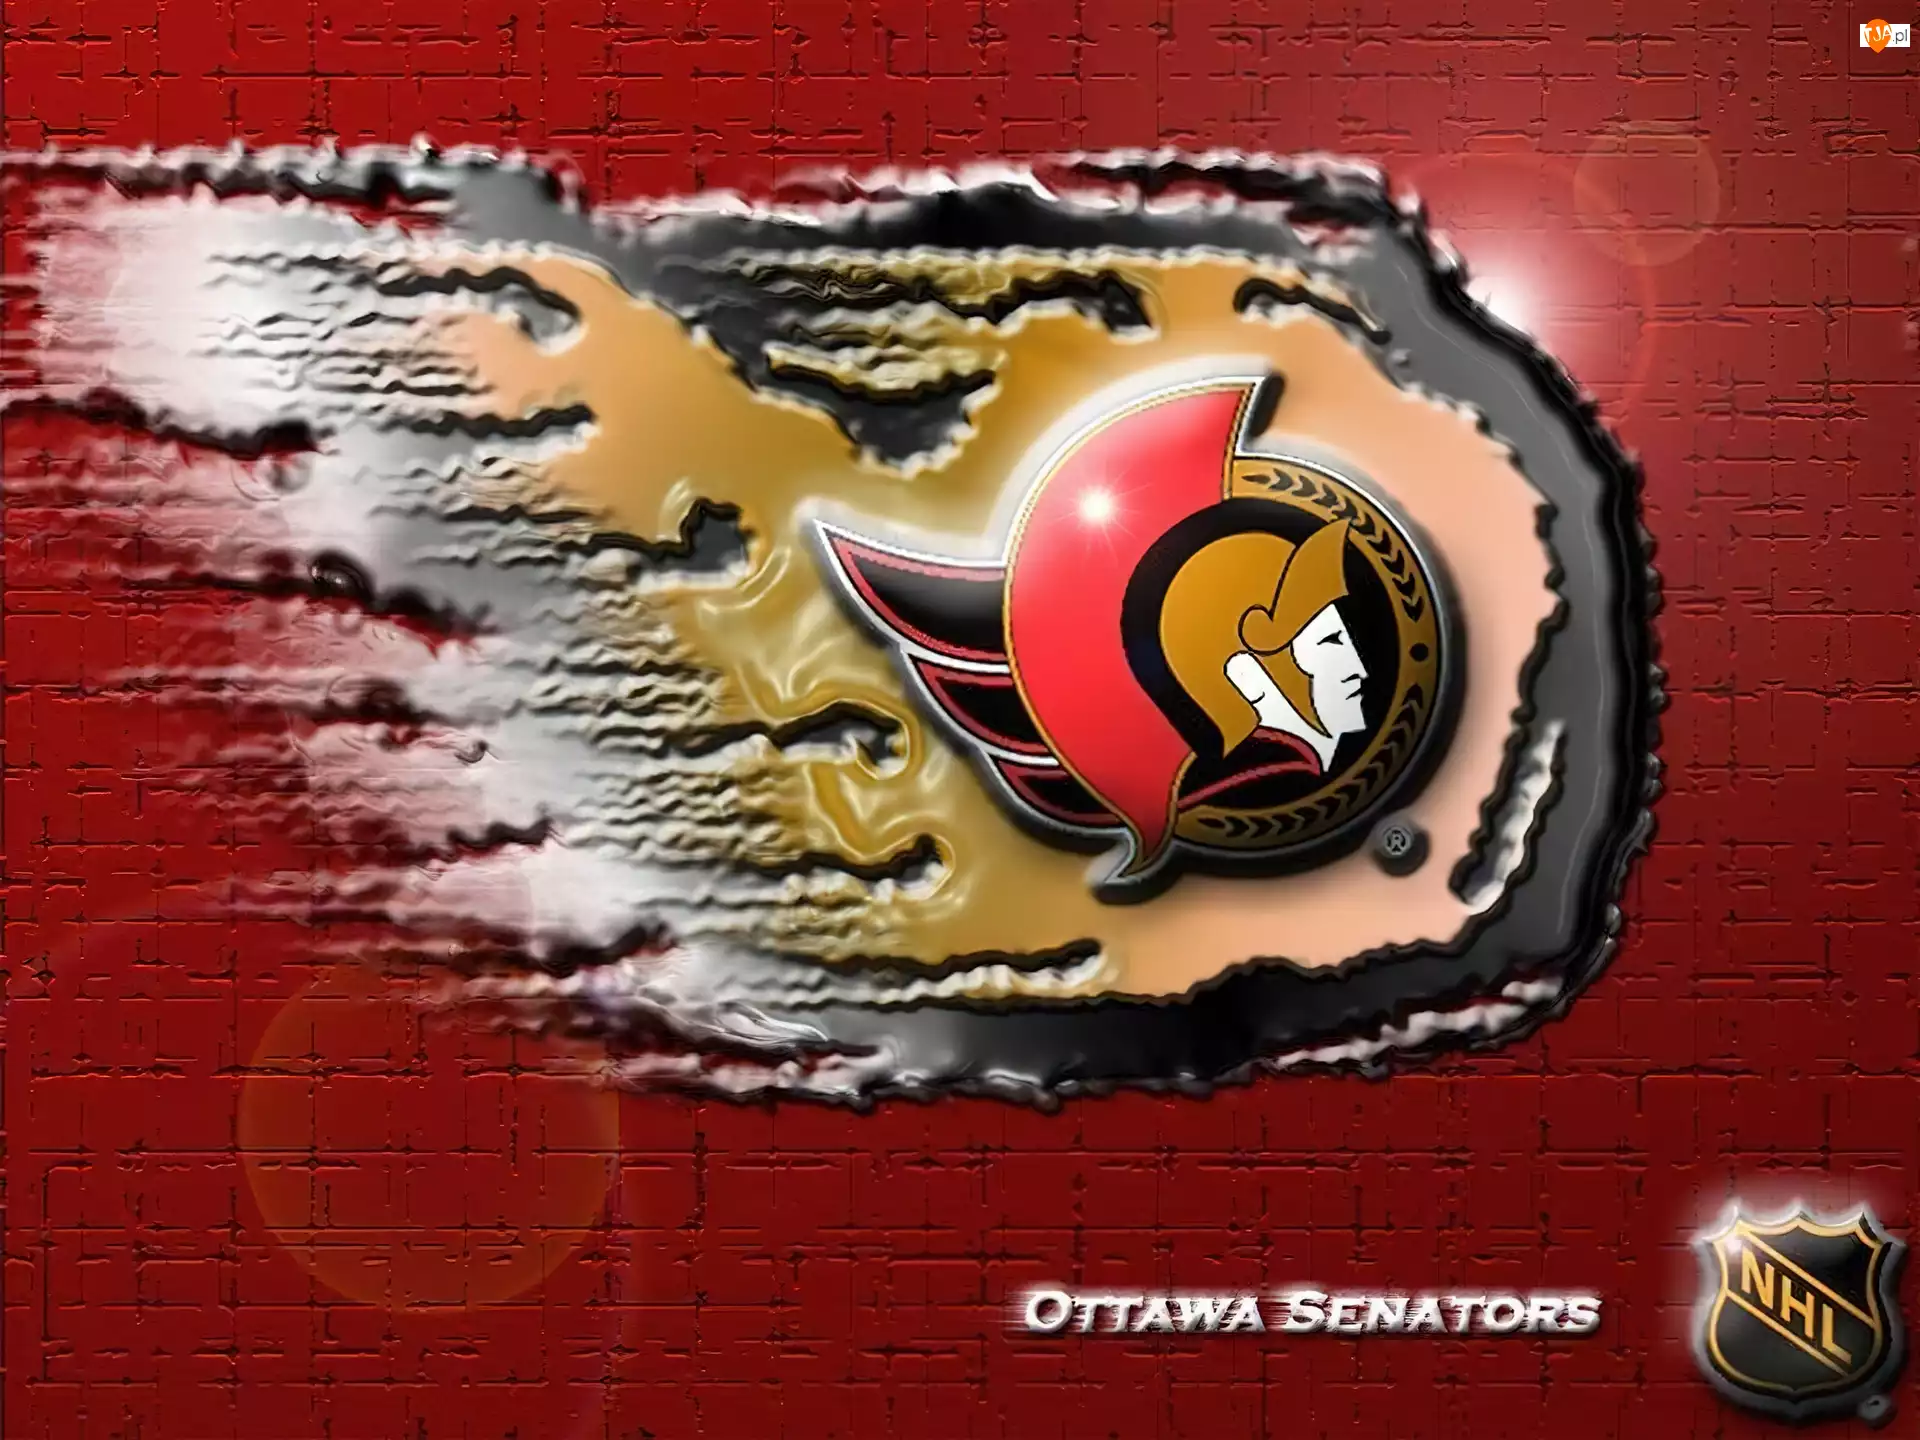 Logo, Ottawa Senators, Drużyny, NHL